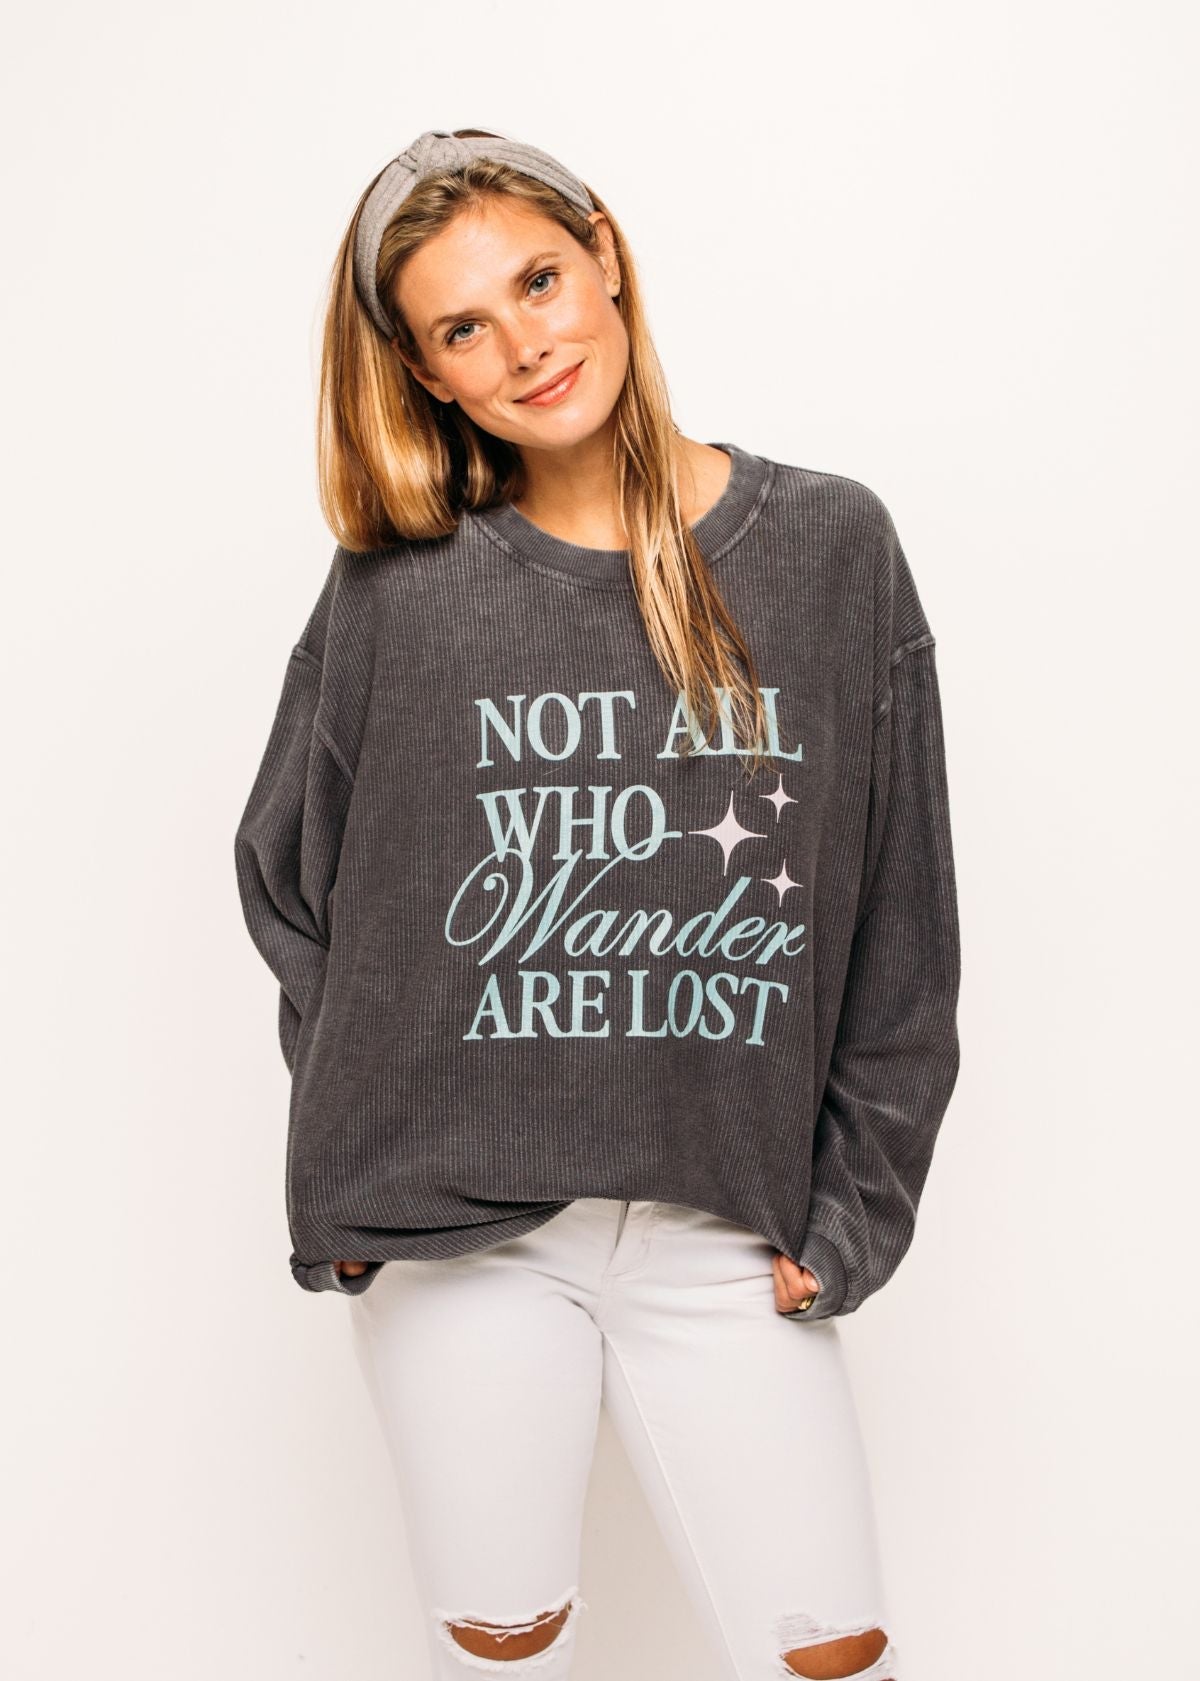 Inspirational Graphic Sweatshirt